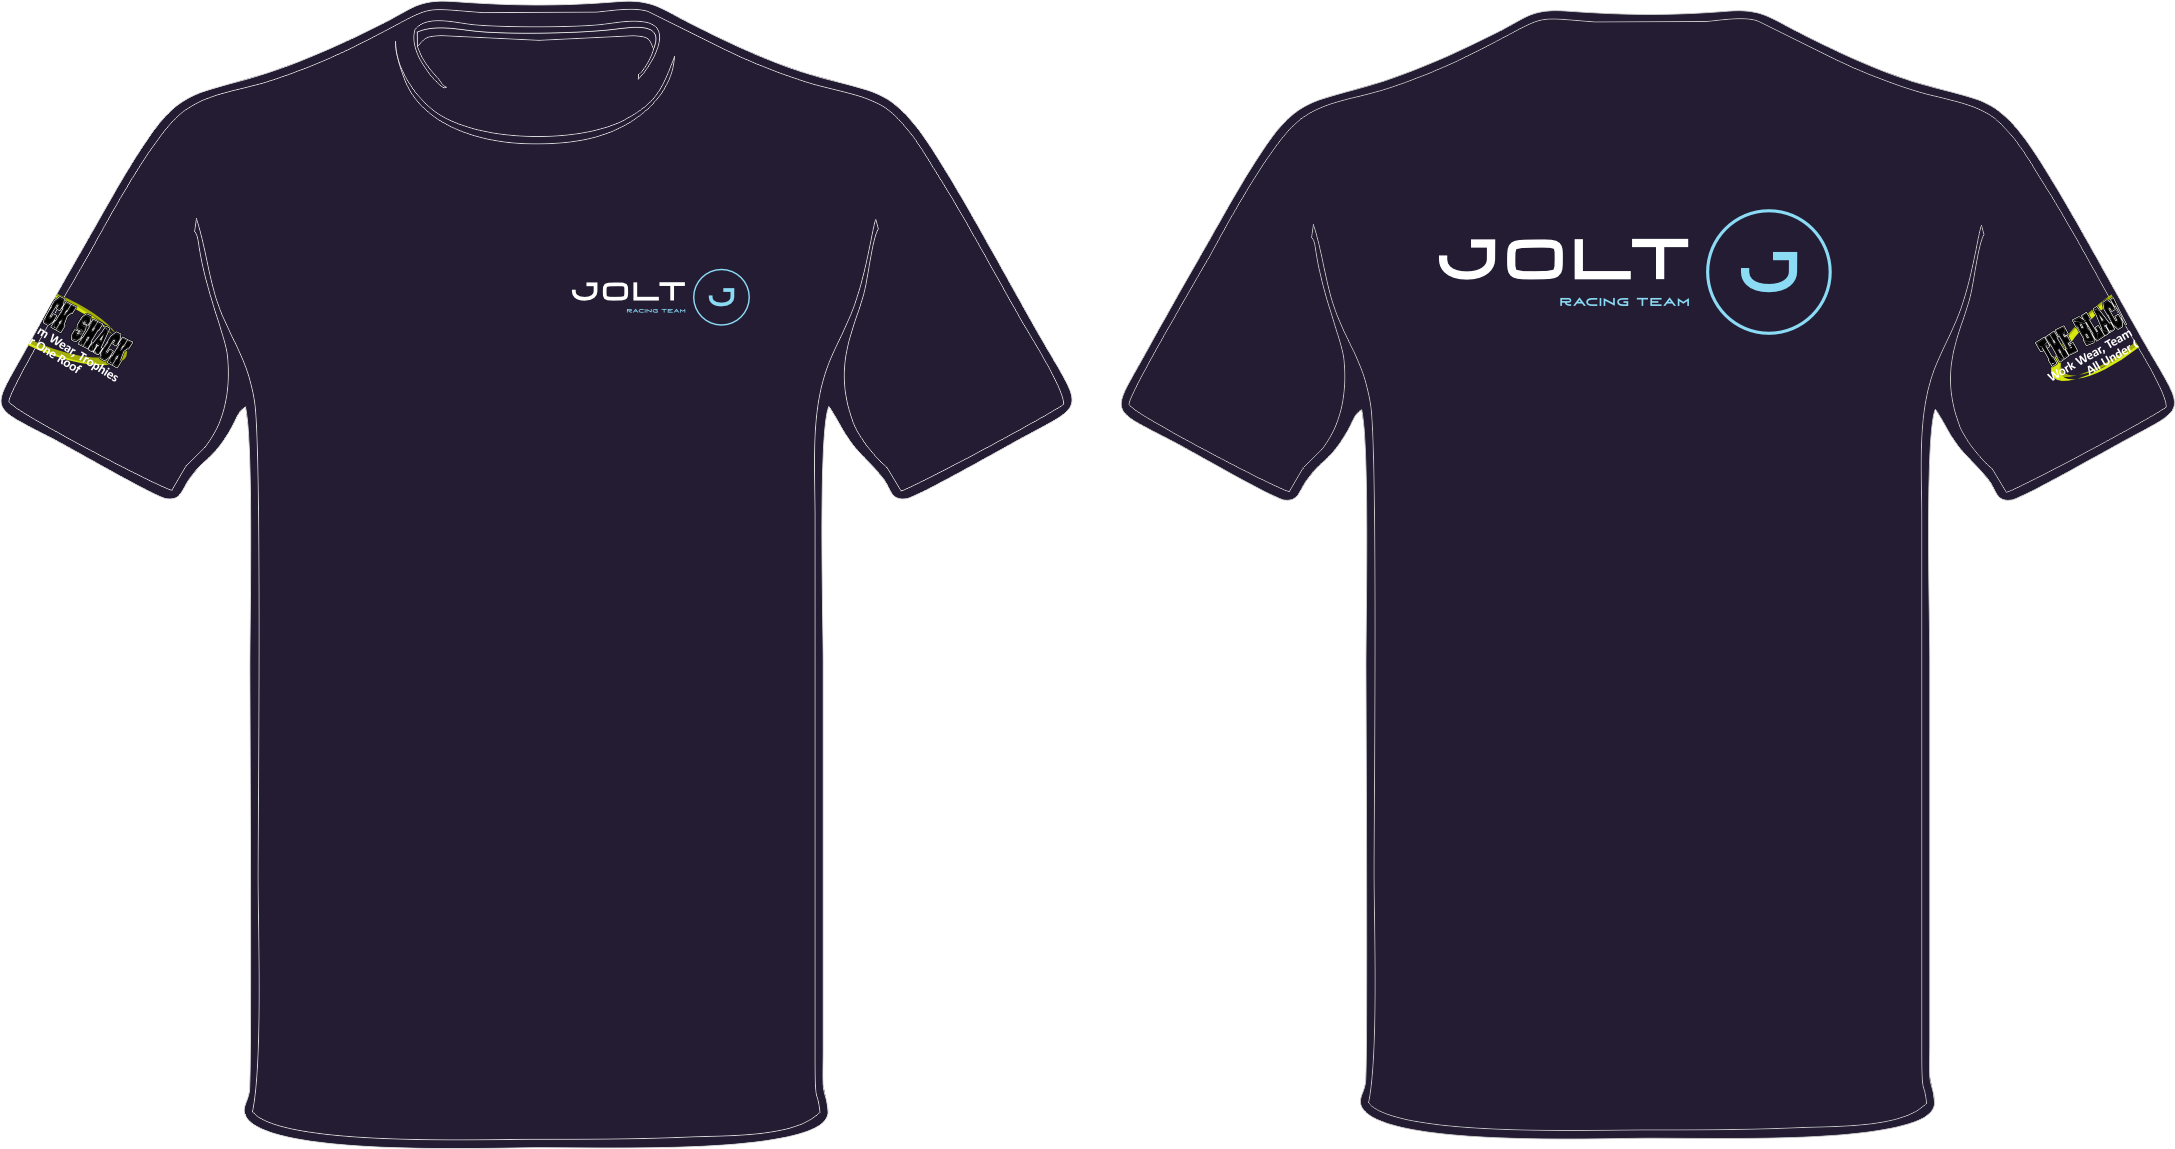 JOLT Racing Team T-Shirt - The Black Shack Ltd